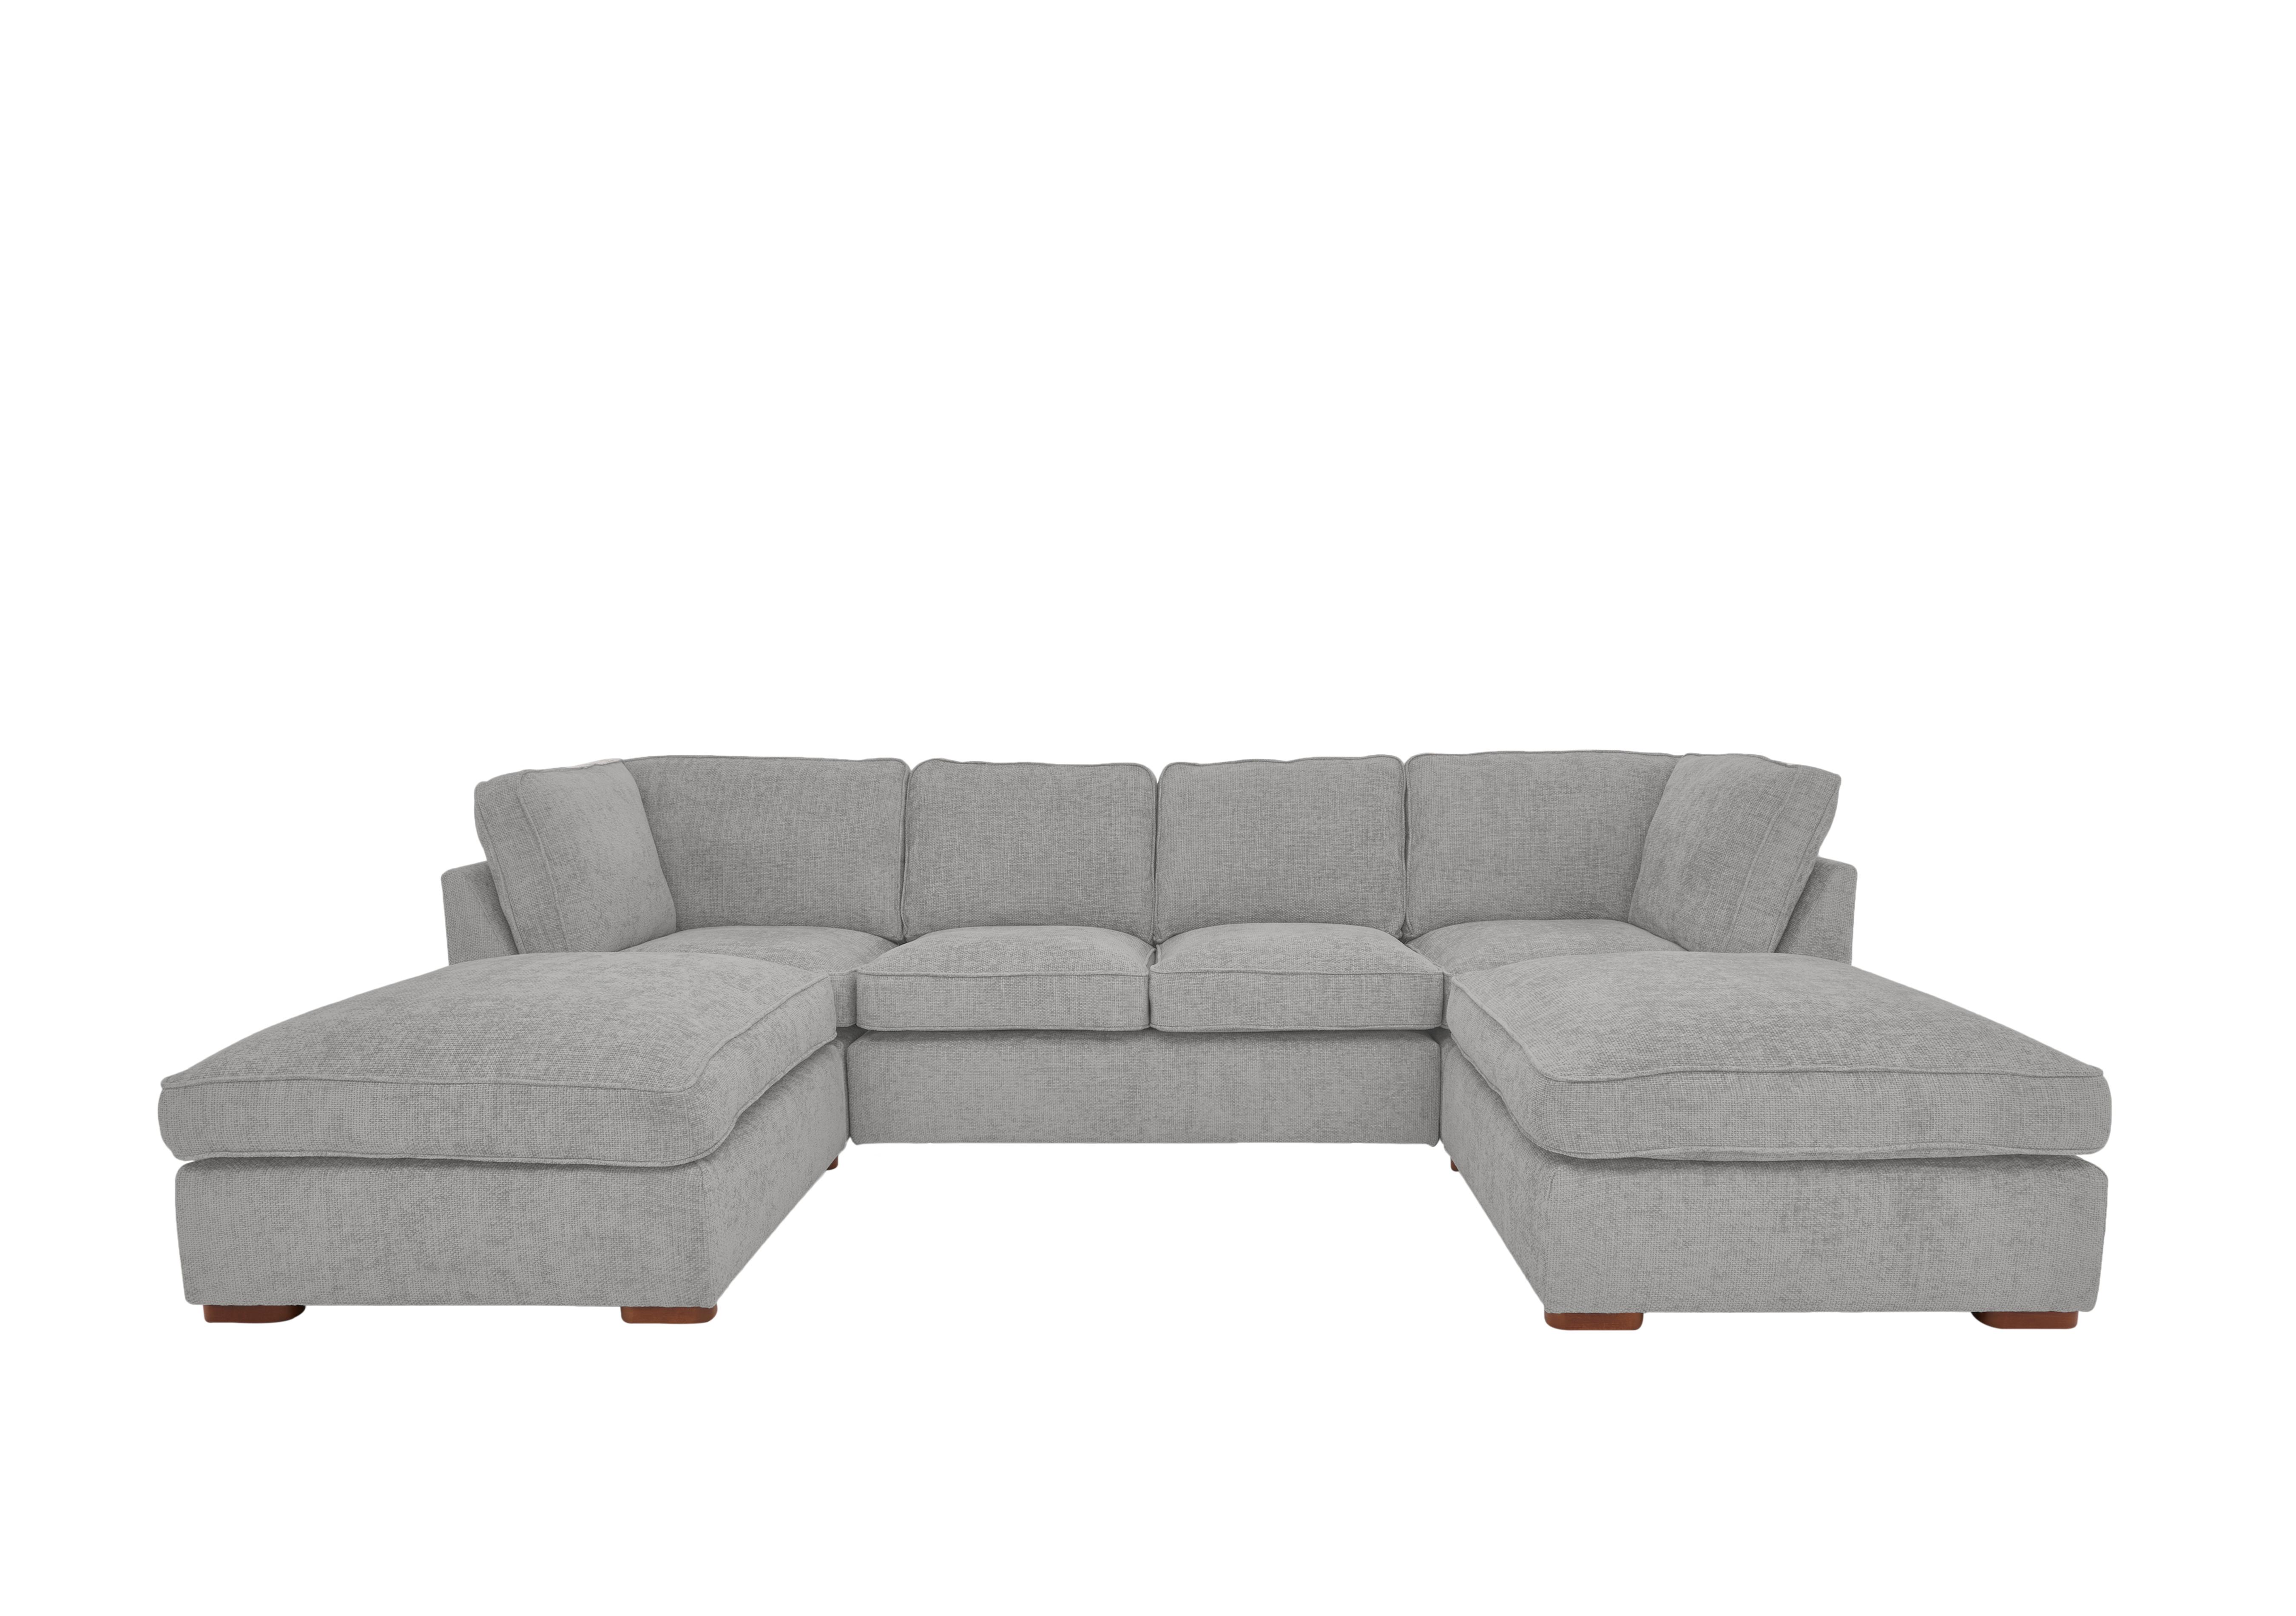 Emilia Large U-Shaped Corner Sofa in Silver on Furniture Village